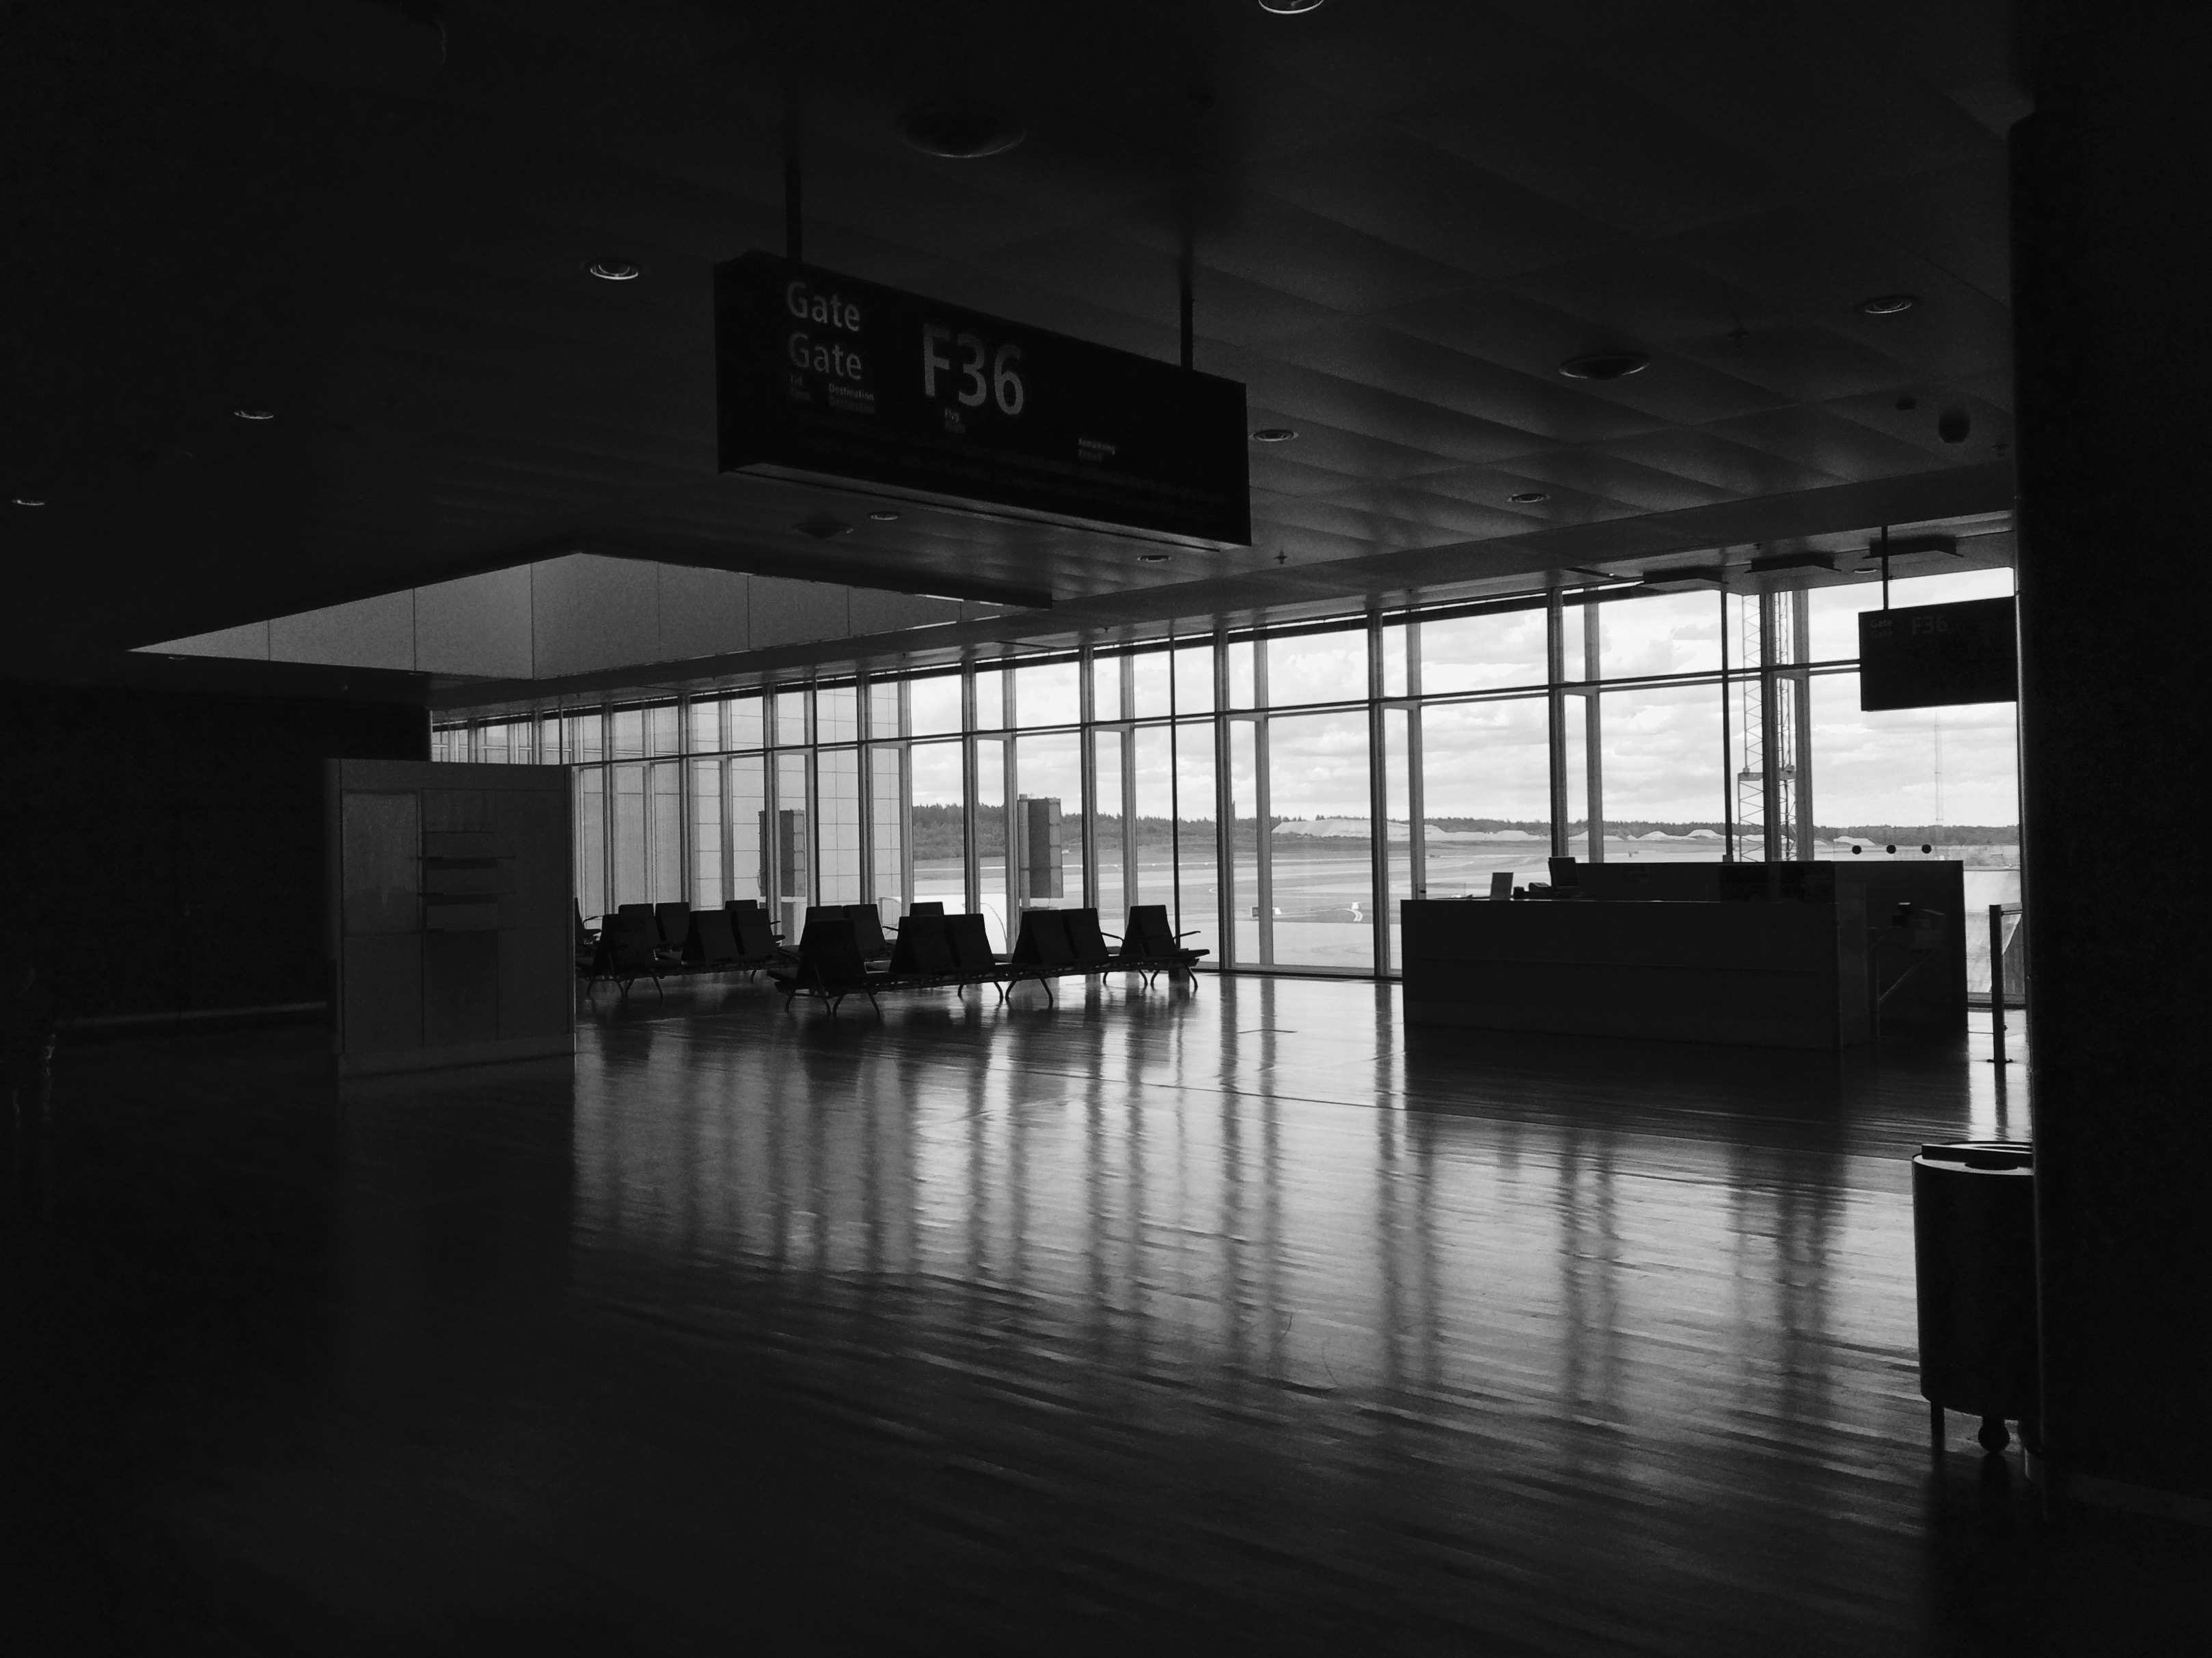 Airport in Scandinavia Overcoming Motion Sickness